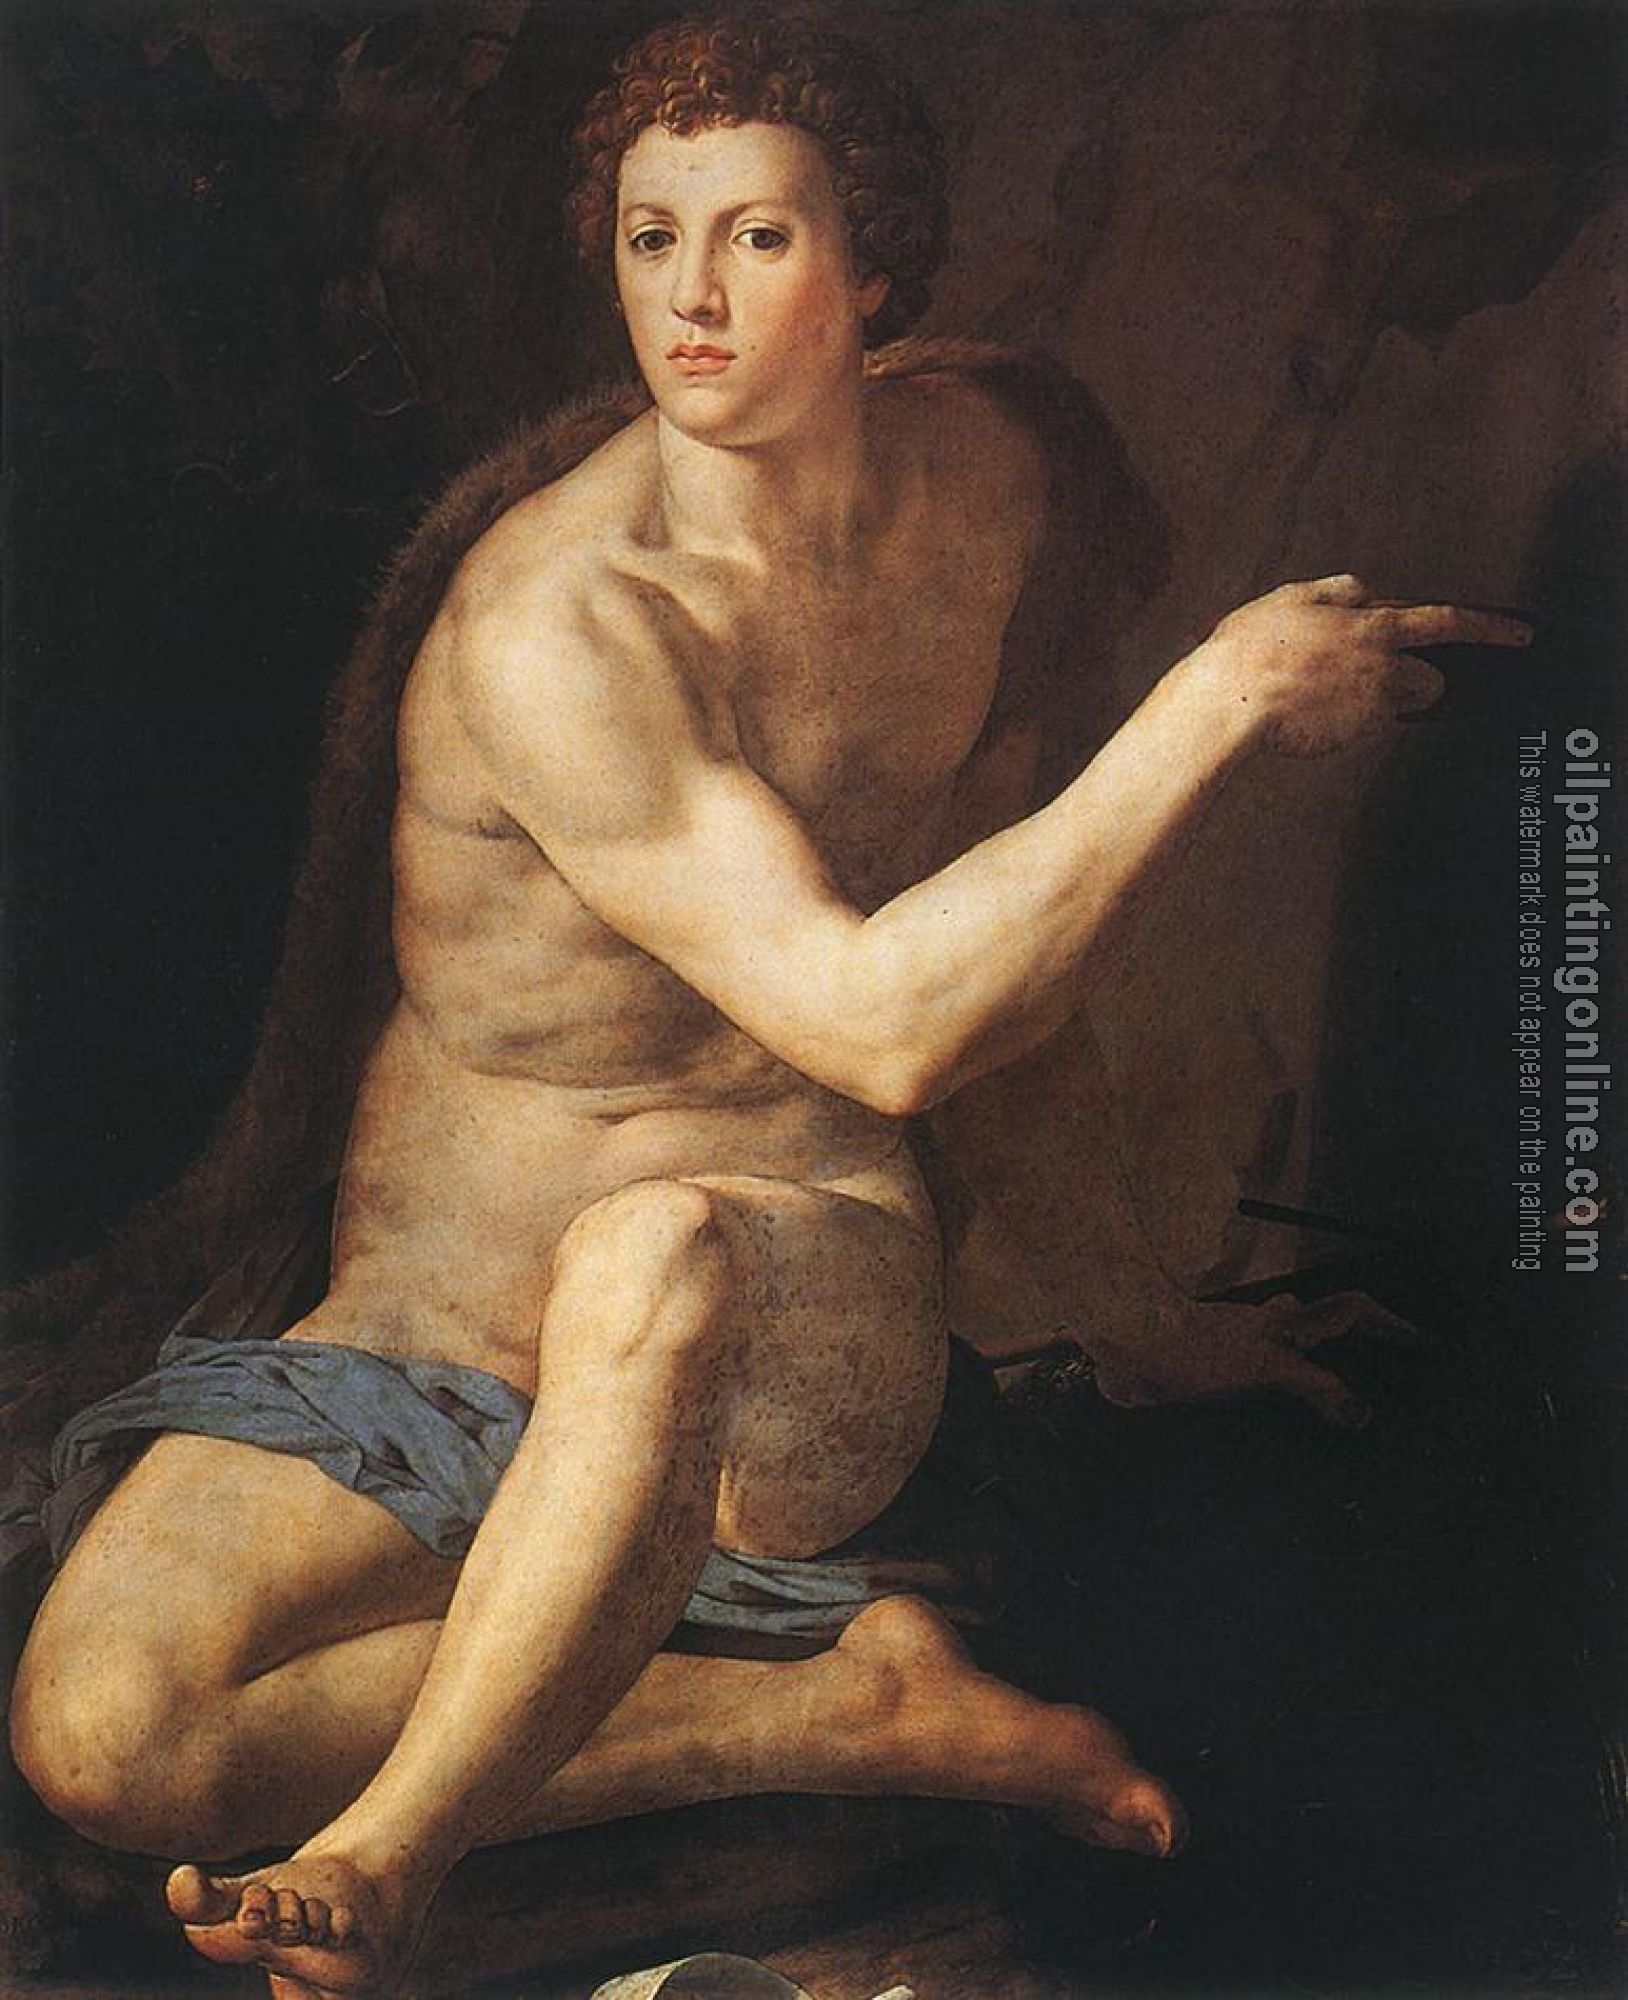 Bronzino, Agnolo - John the Baptist